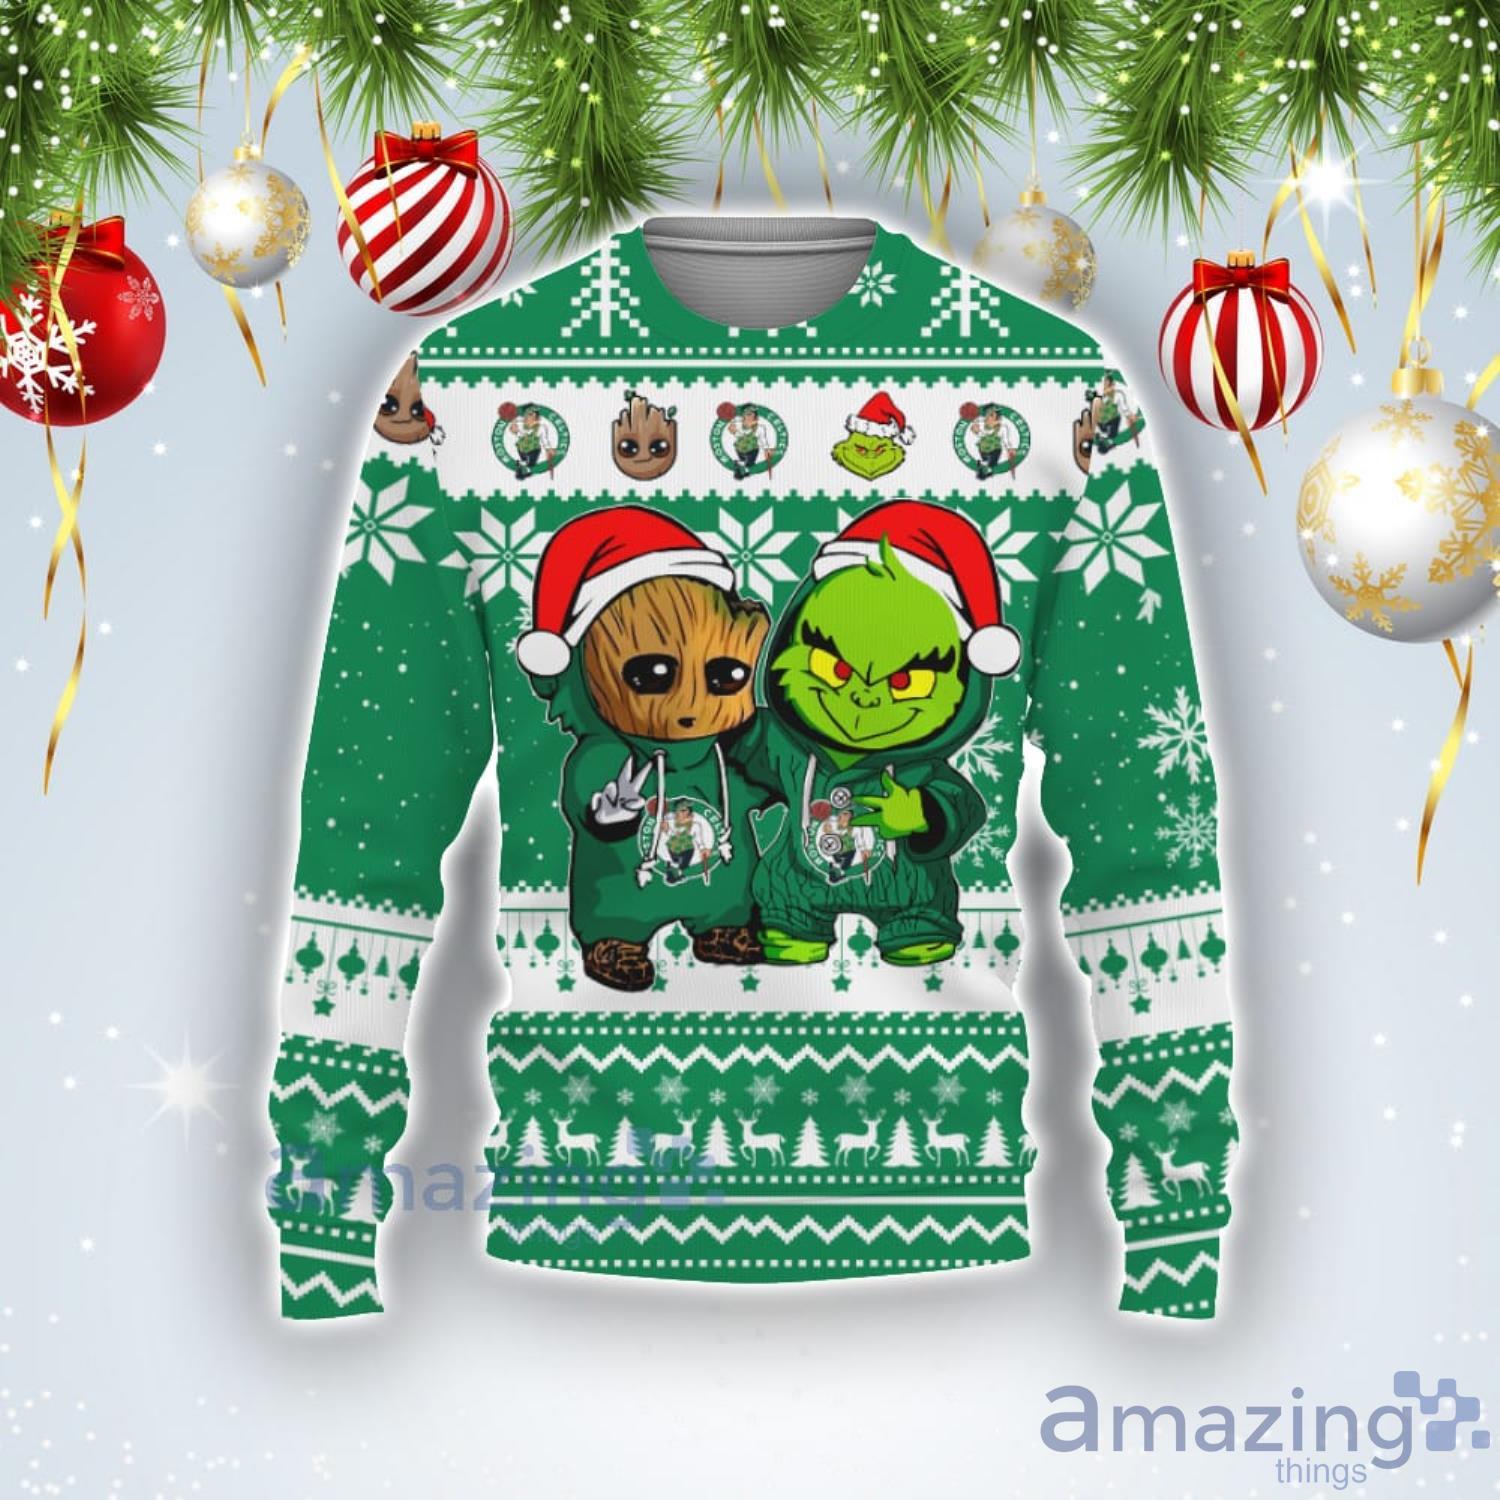 NBA Toronto Raptors Baby Groot And Grinch Ugly Christmas Sweater